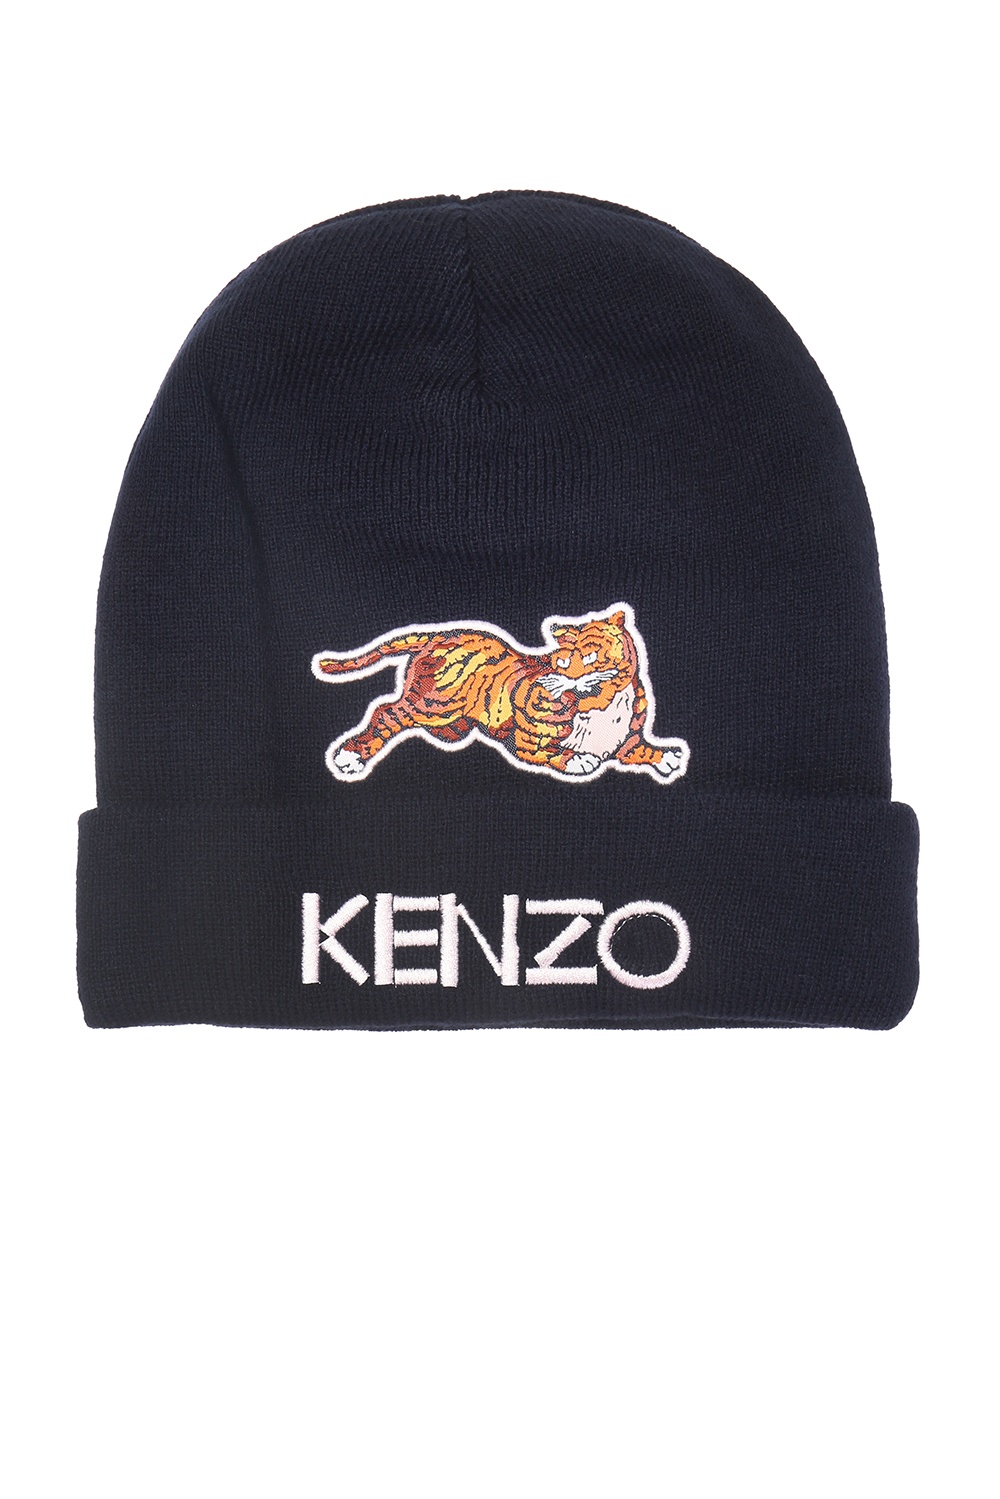 kids kenzo hat